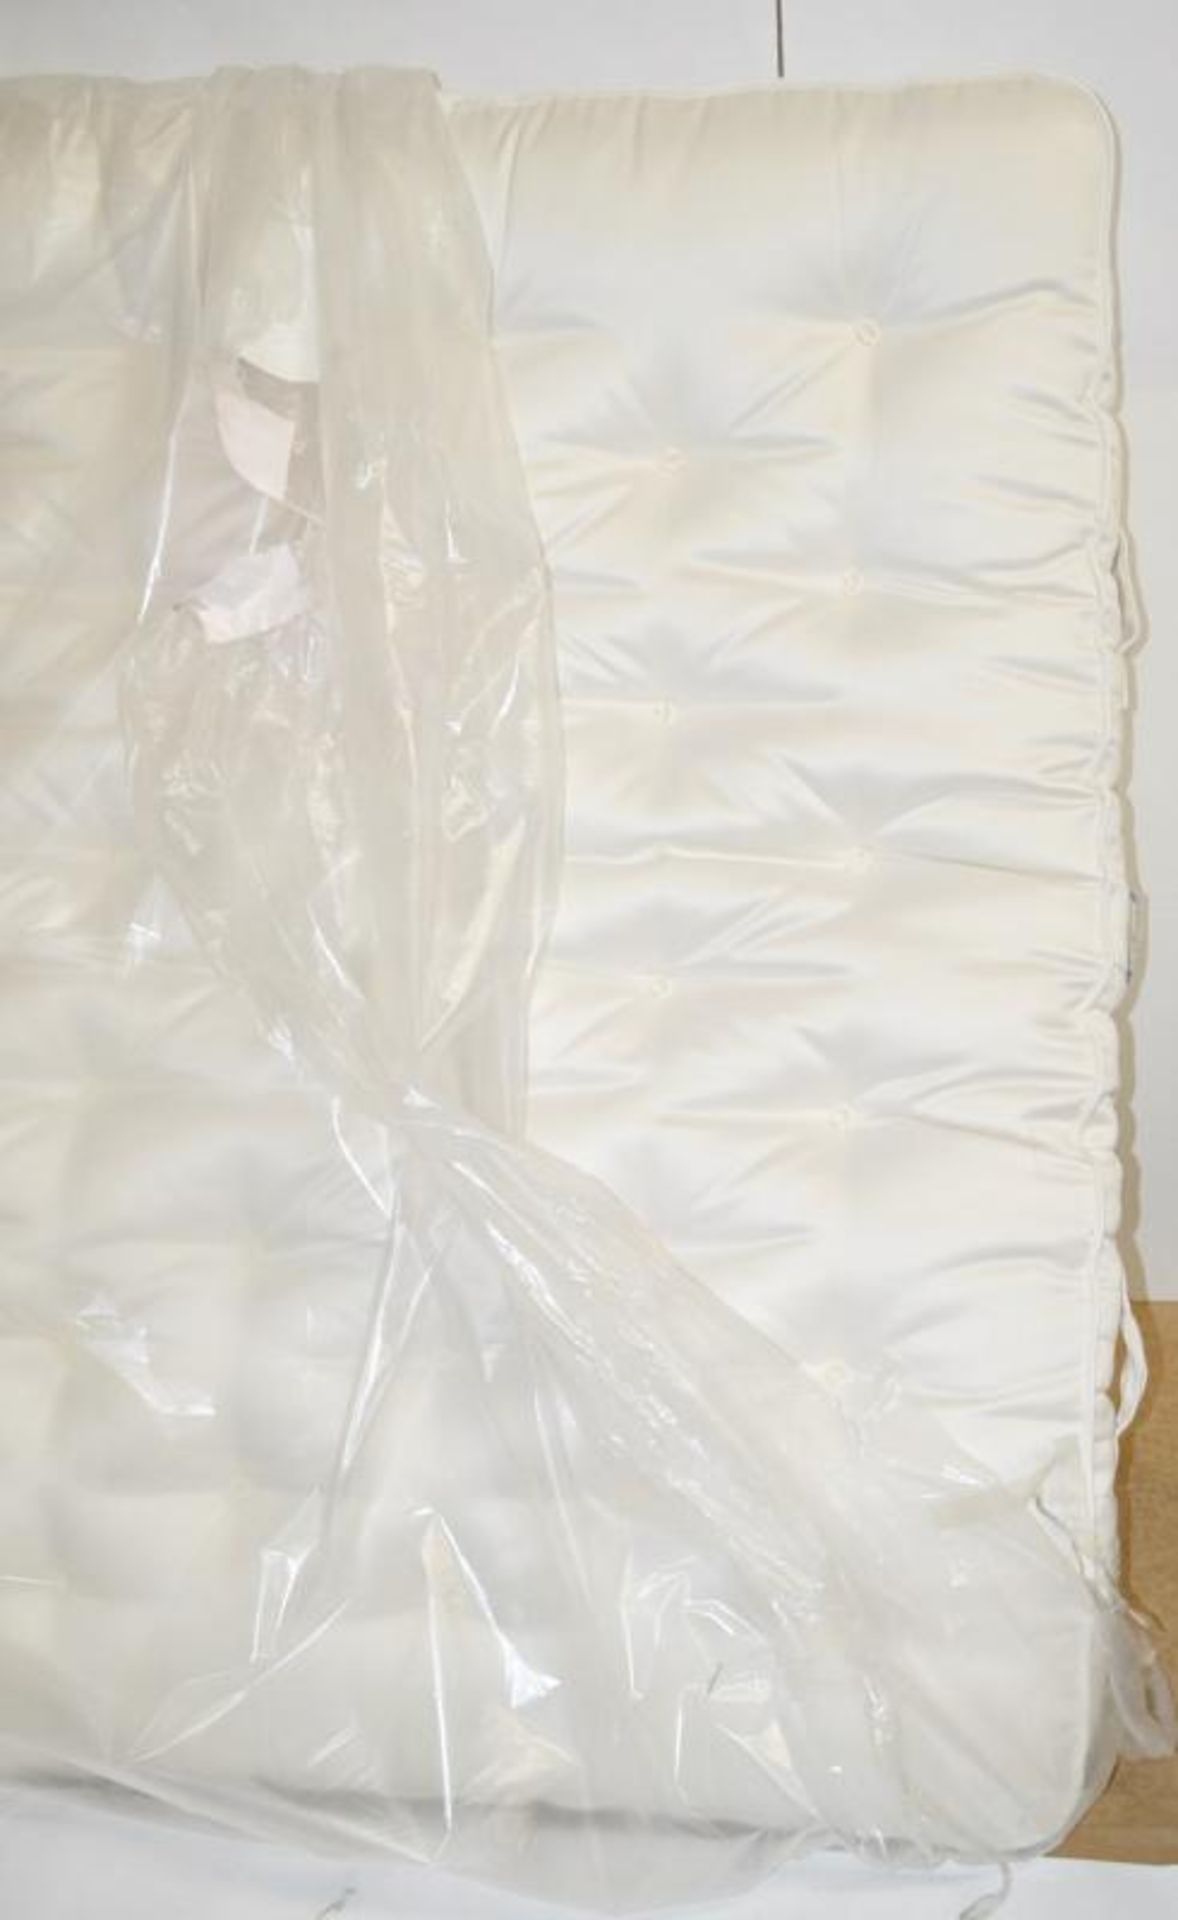 1 x Vispring 'Bedstead Supreme' Luxury Mattress - Custom Size: 175 x 200 x 23cm - Handmade In Great - Image 3 of 10